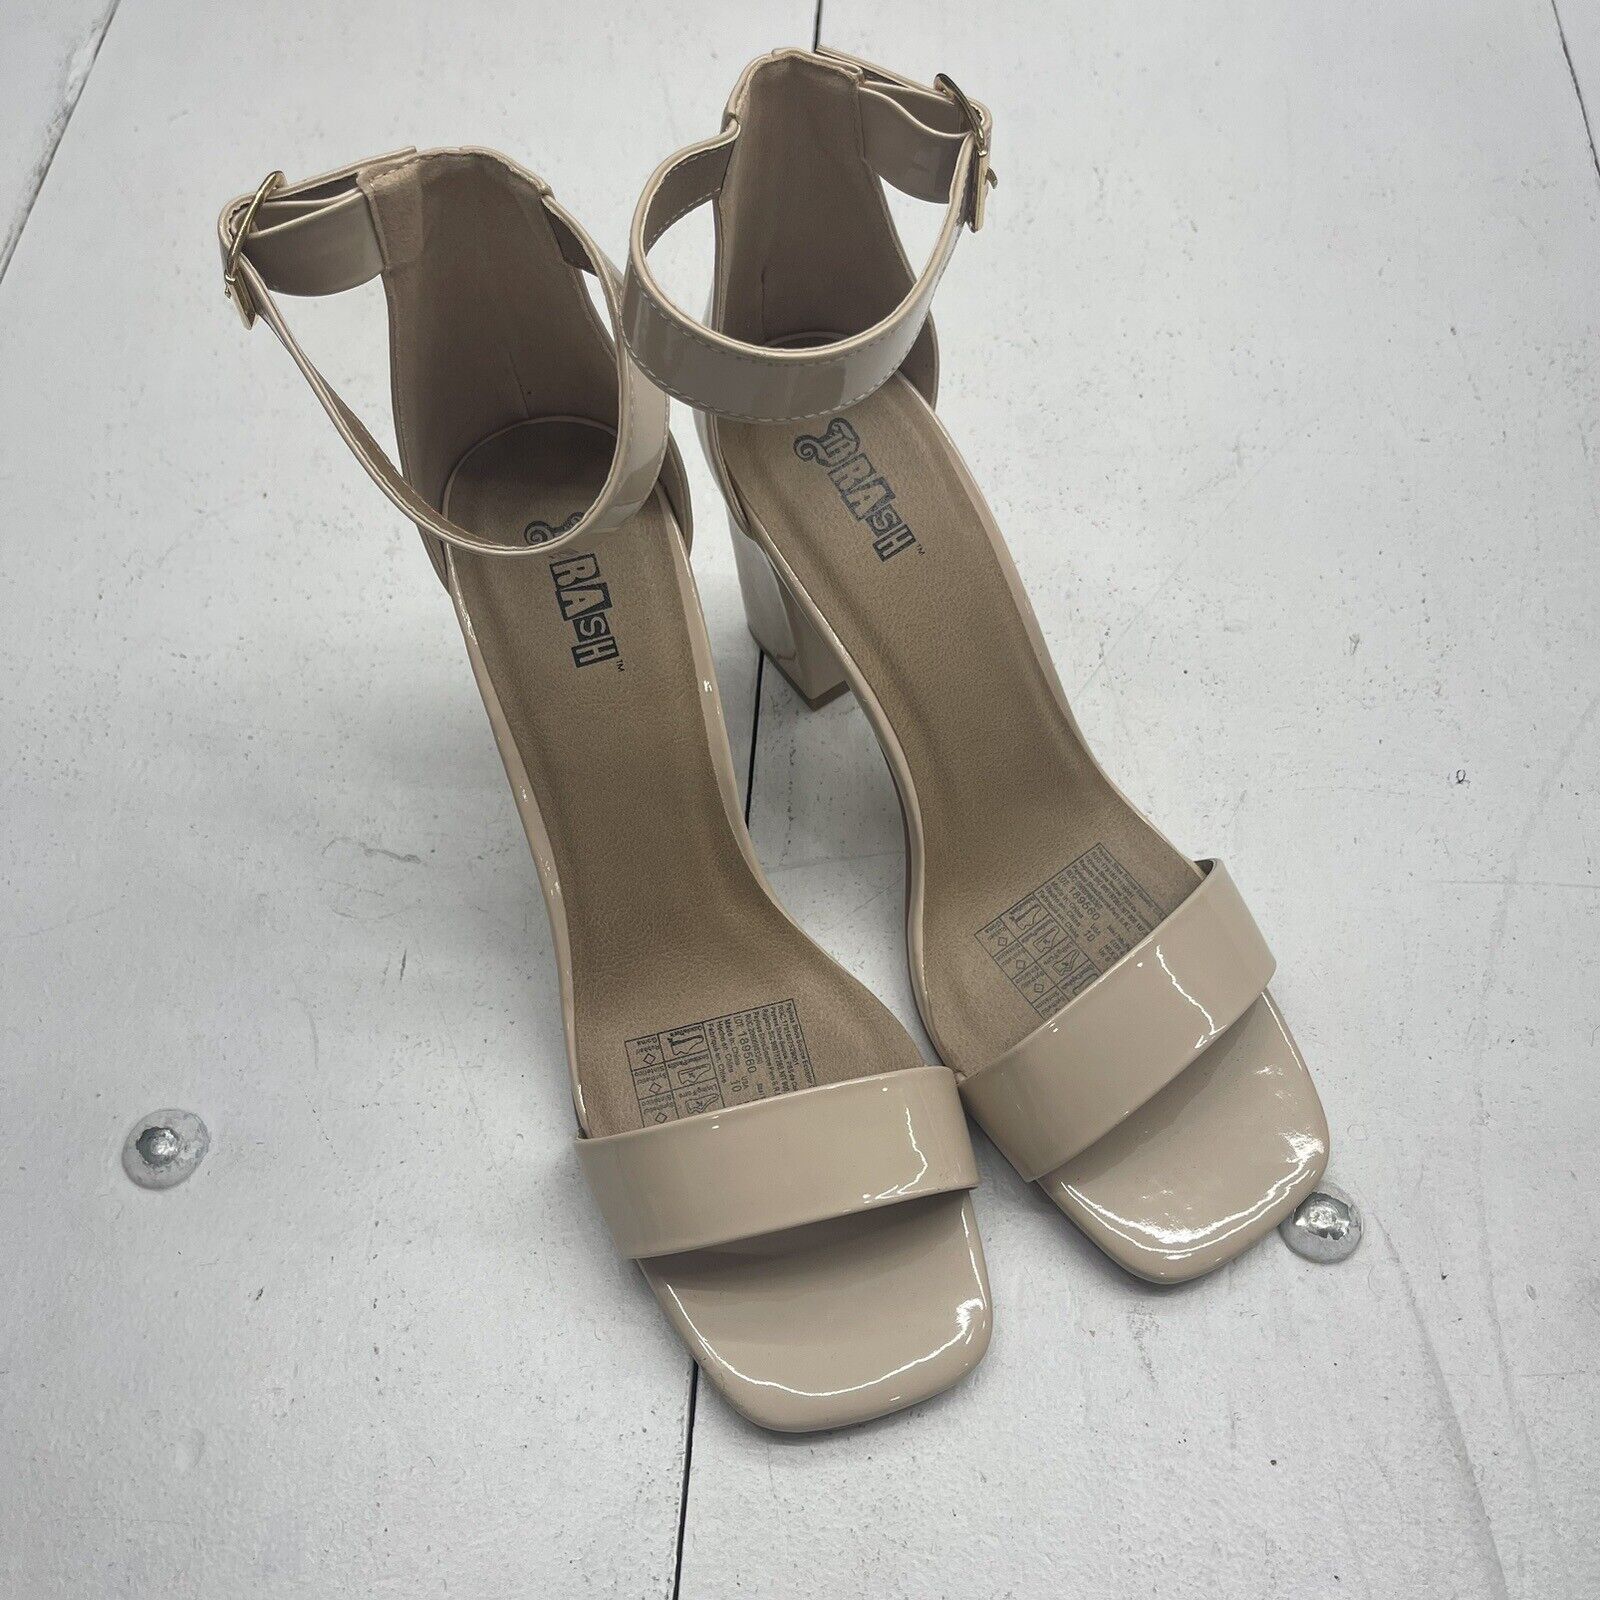 Pre-Owned Pair of Women's Brash Black High Heel Shoes Size 10 | eBay